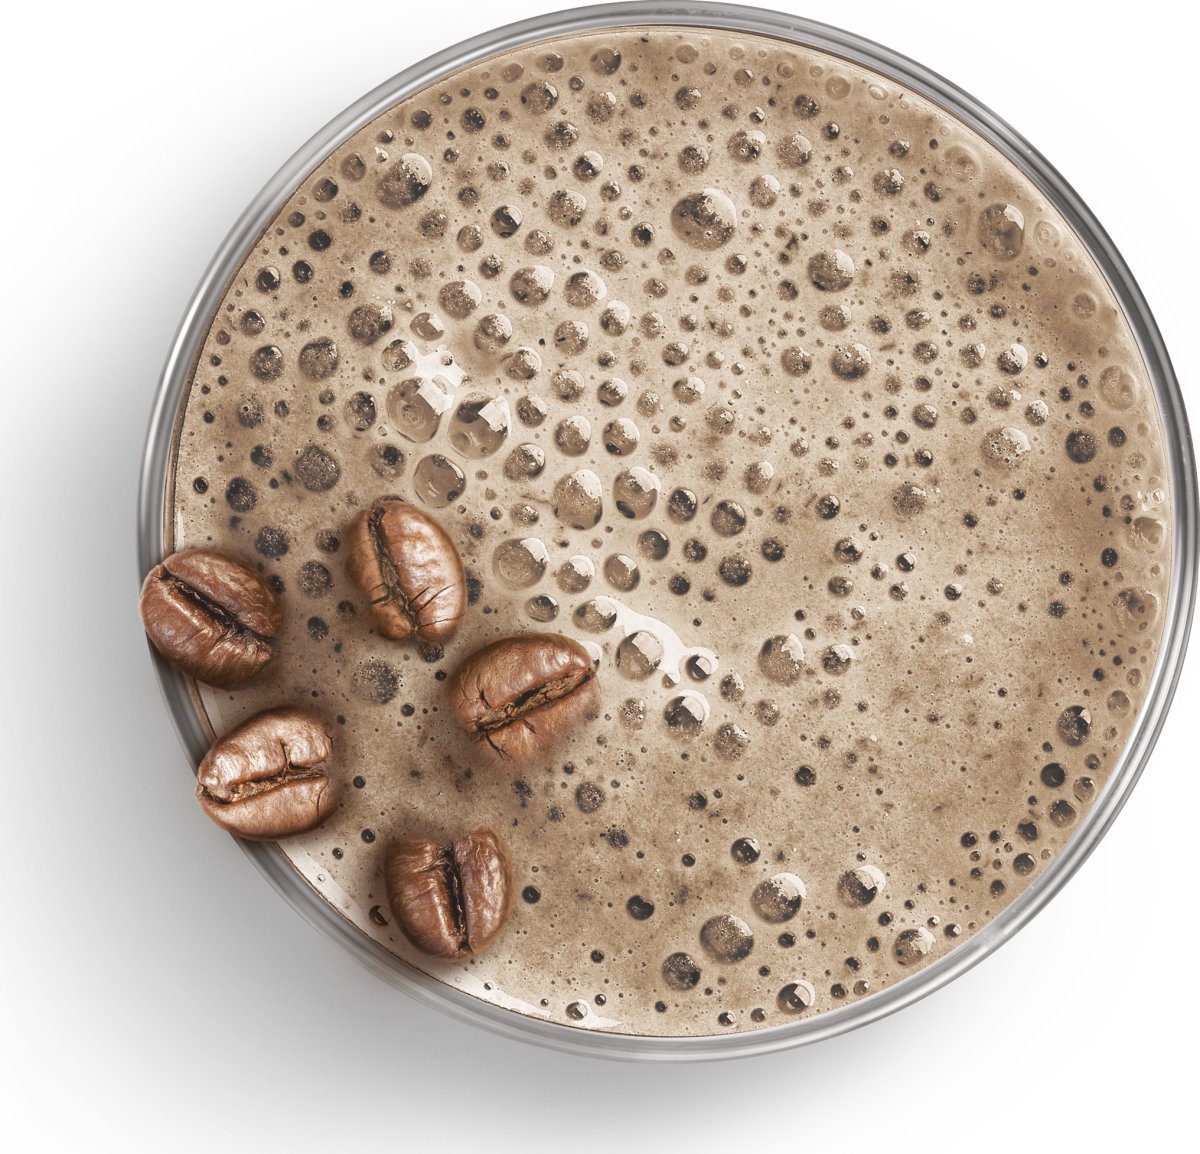 Nupo Diet Shake Caffe Latté, 384 g